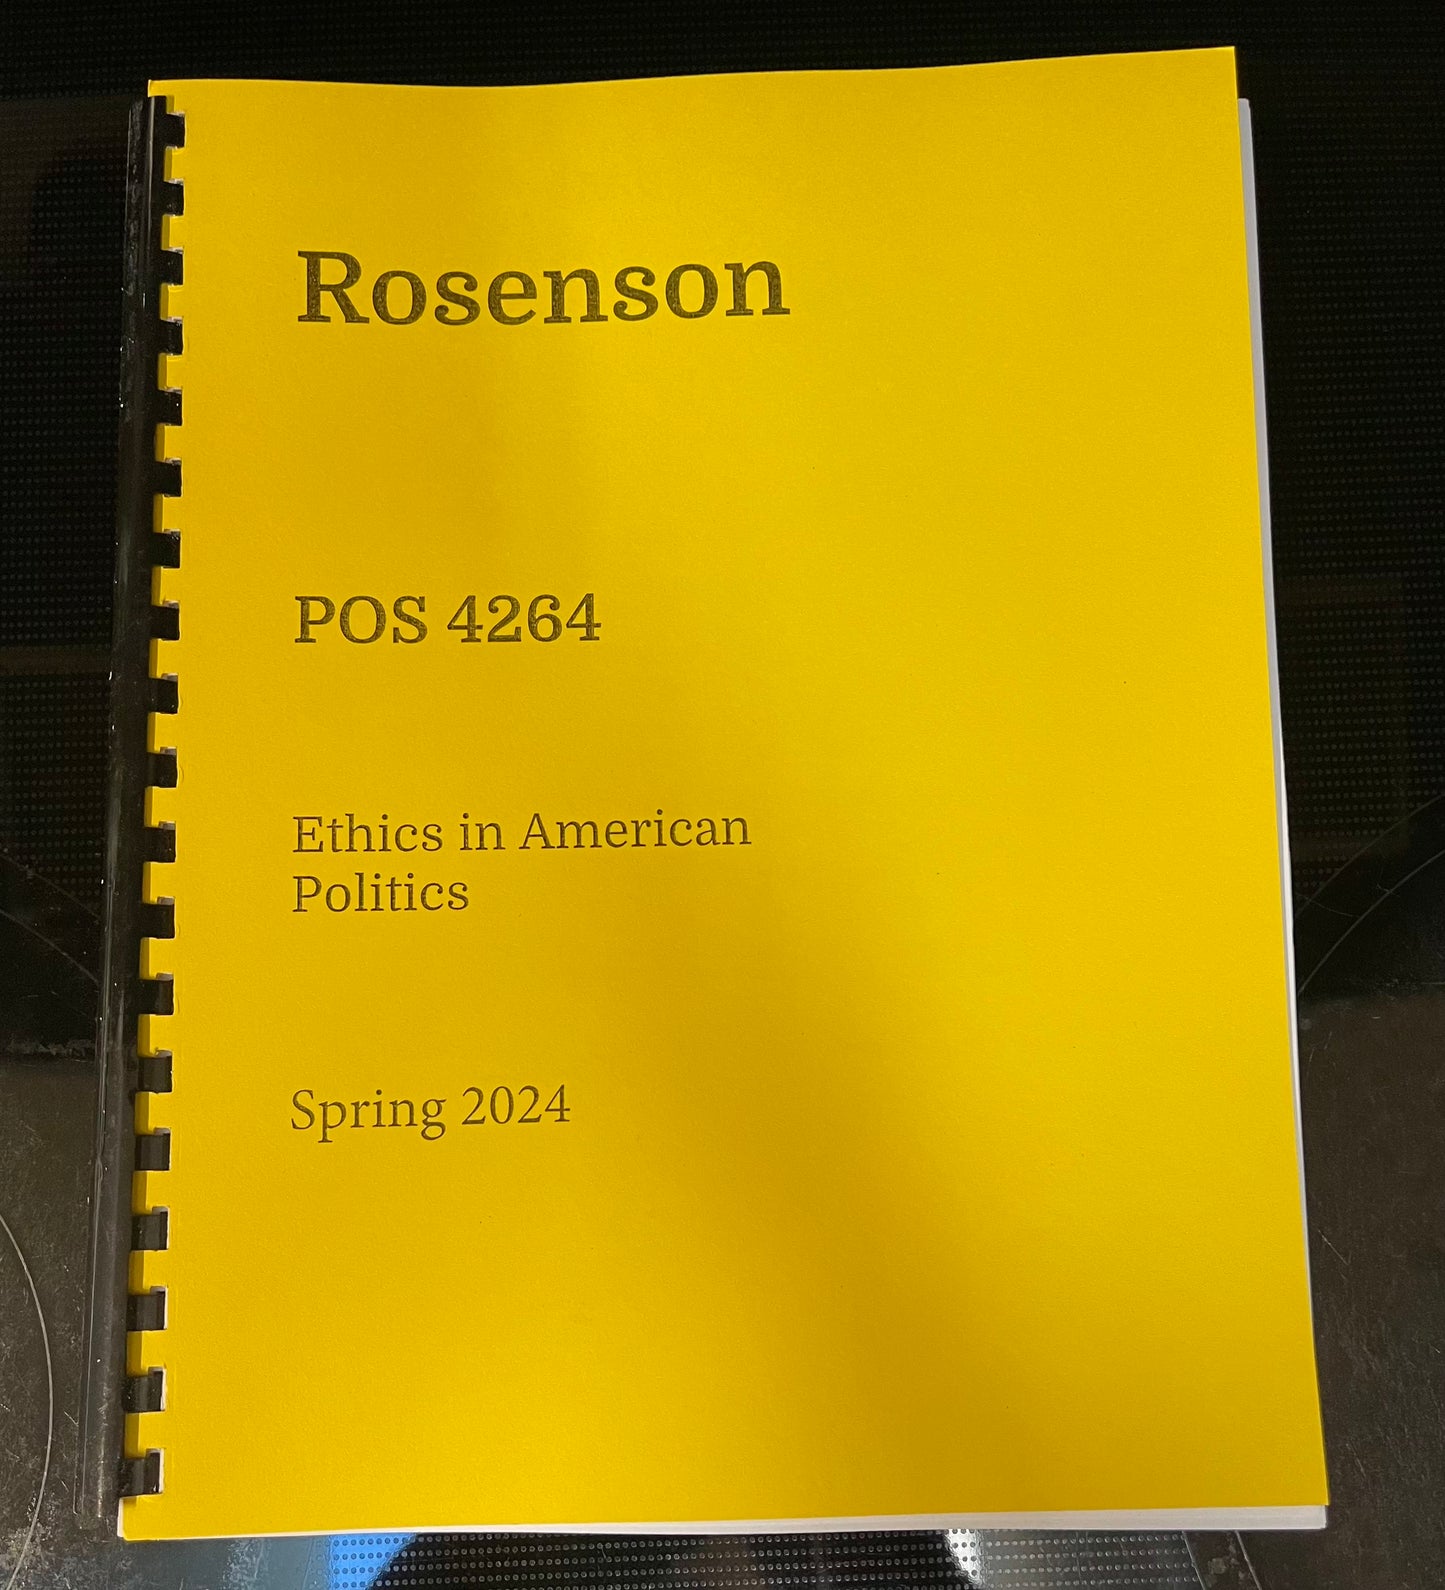 POS 4264 Spring 2024 Professor Rosenson